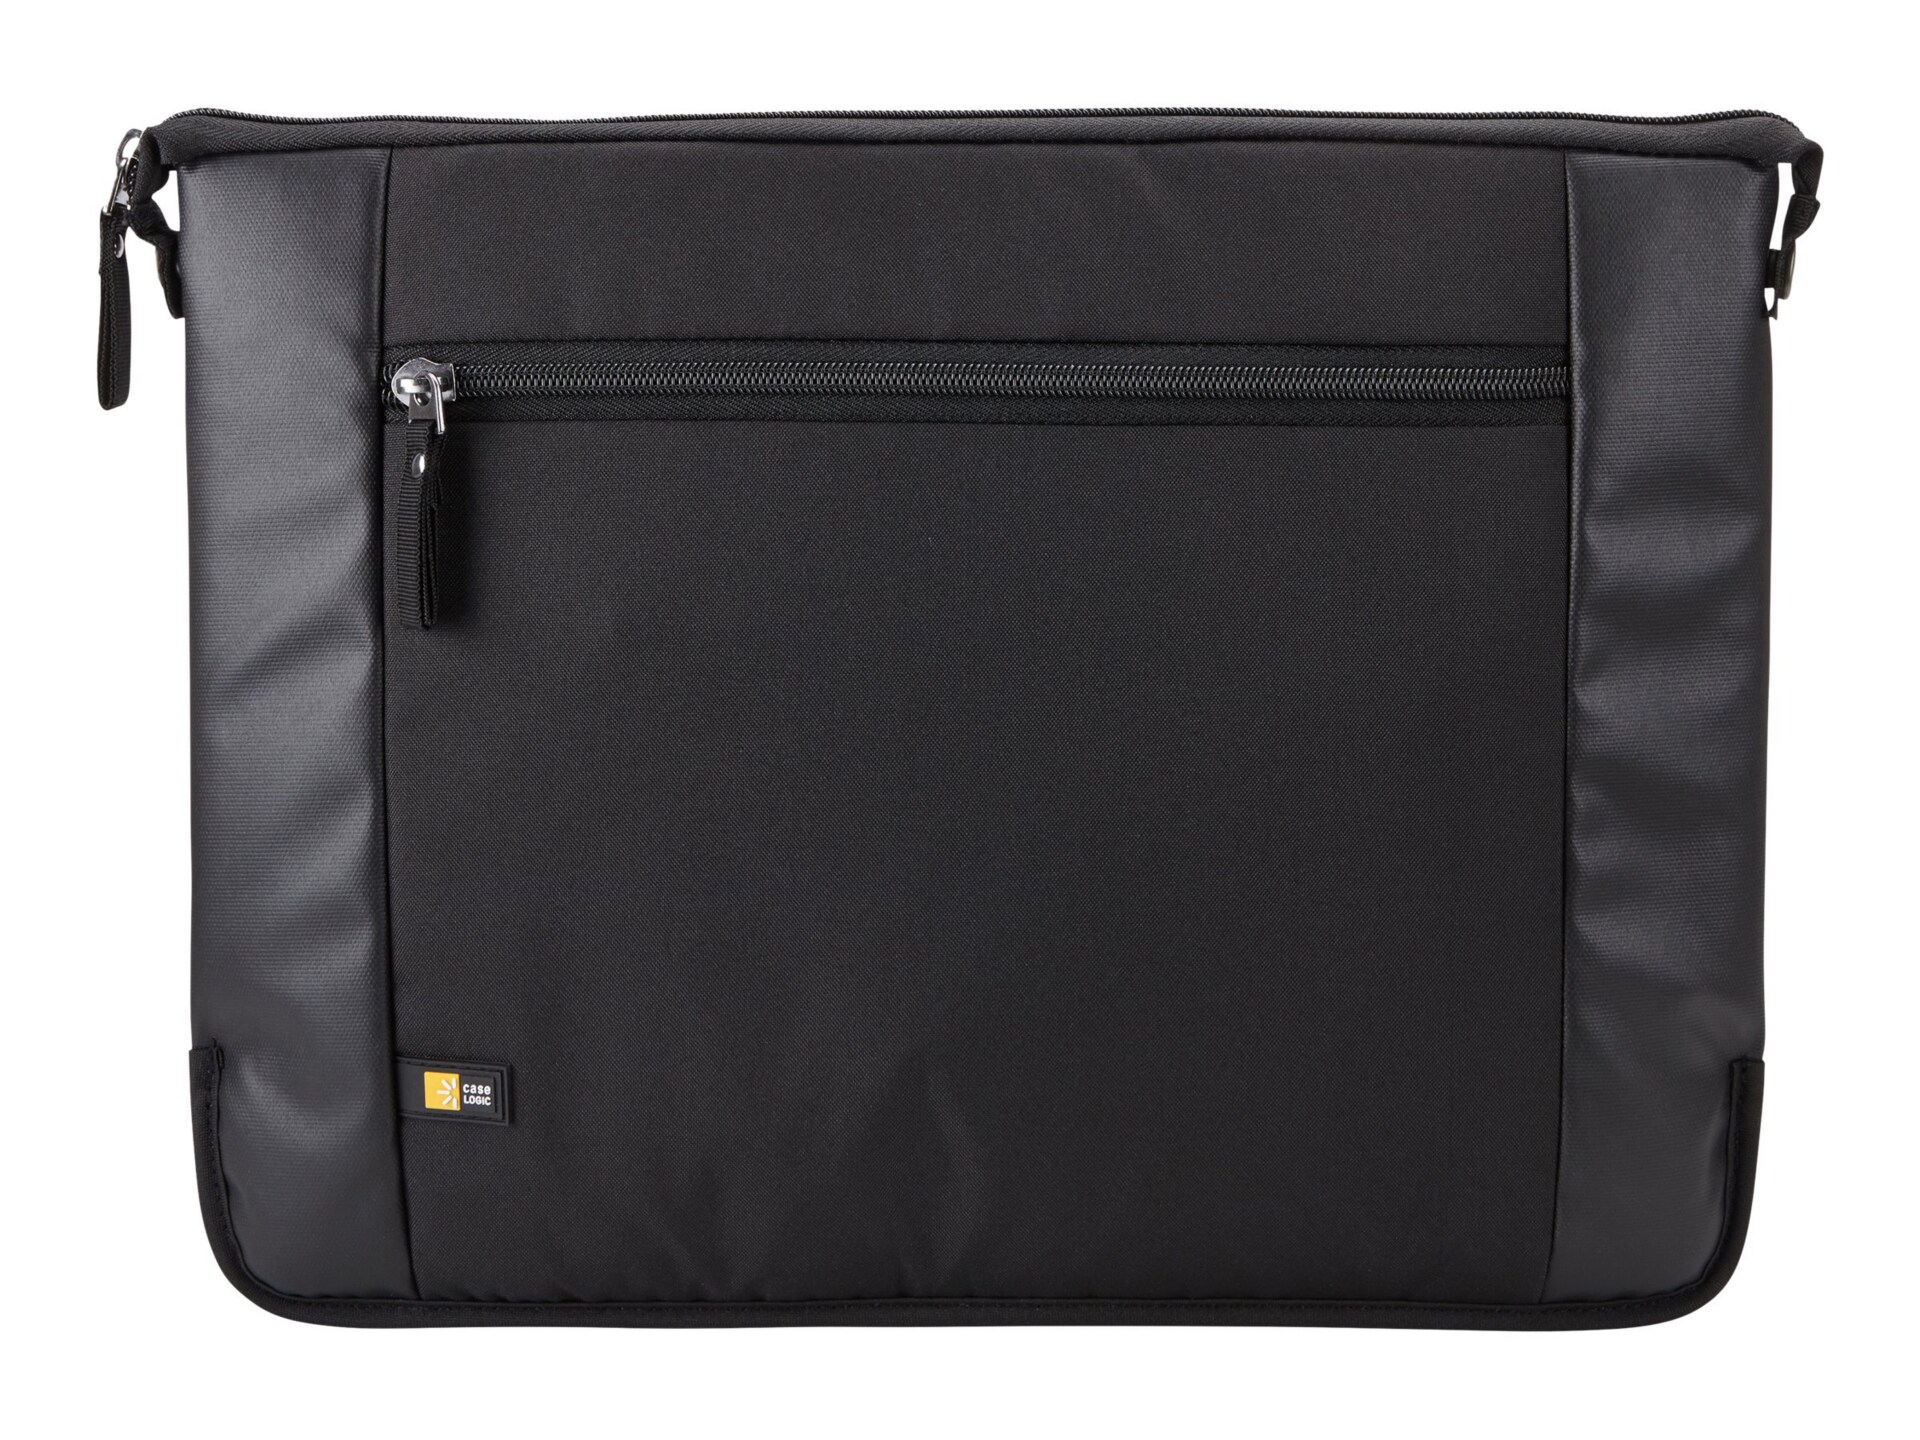 Case Logic Intrata 14" Laptop Bag - notebook carrying case